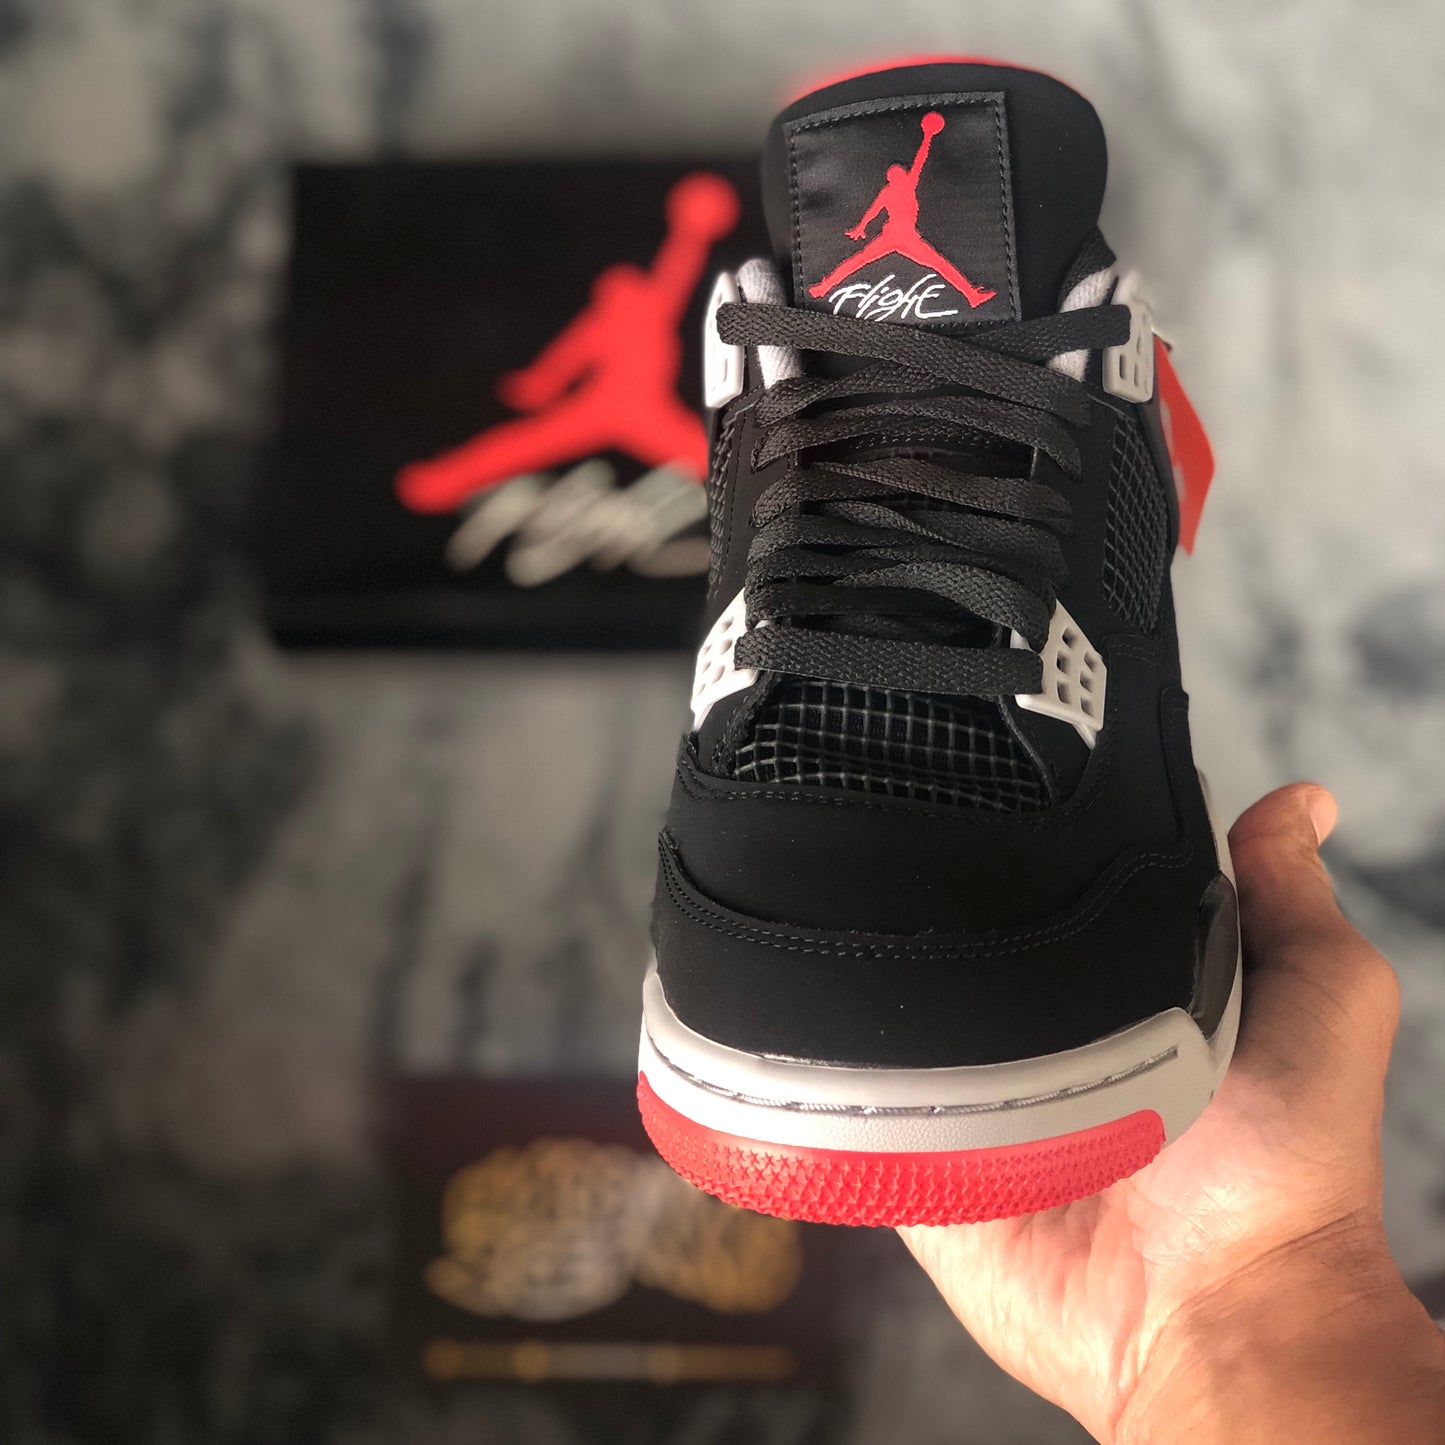 Air Jordan 4 Retro - Bred (2019)